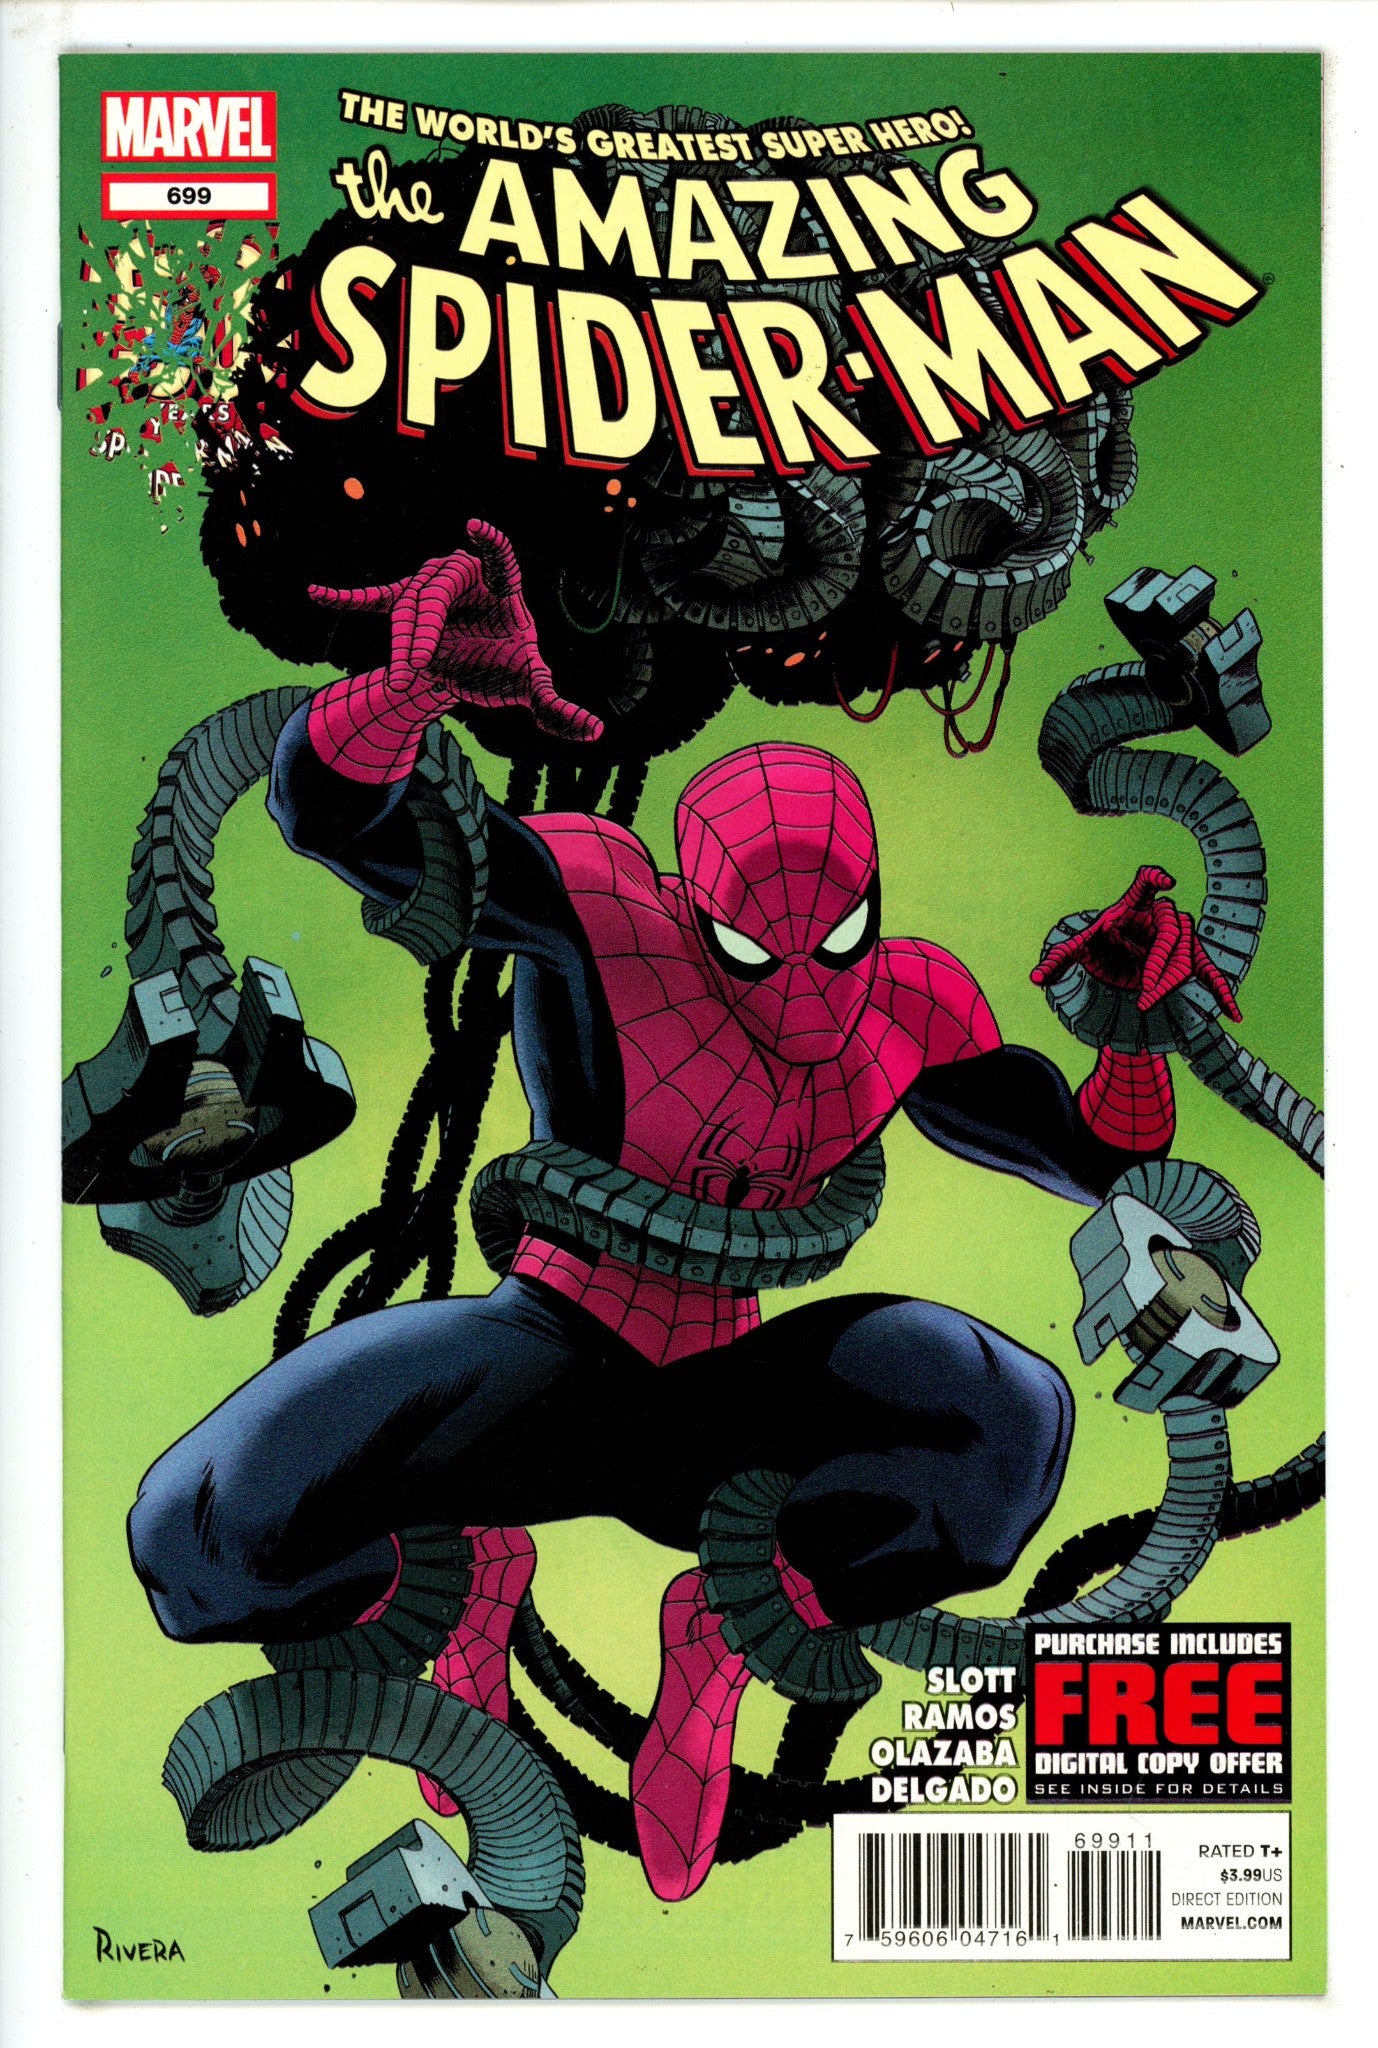 The Amazing Spider-Man Vol 2 699 High Grade (2013) 